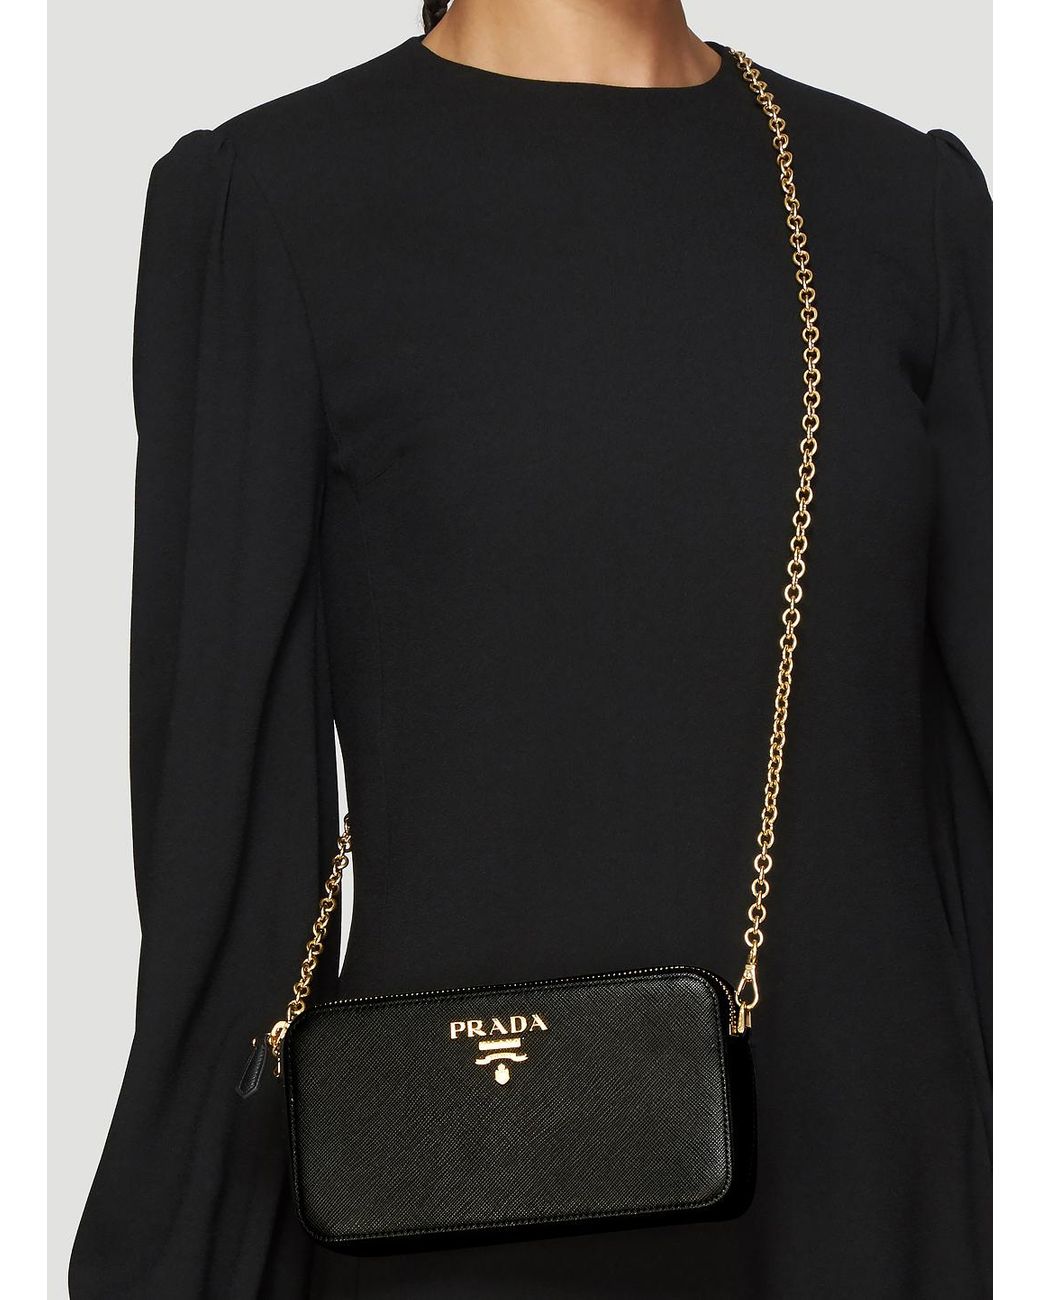 Prada Saffiano Leather Mini Shoulder Bag in Black | Lyst UK